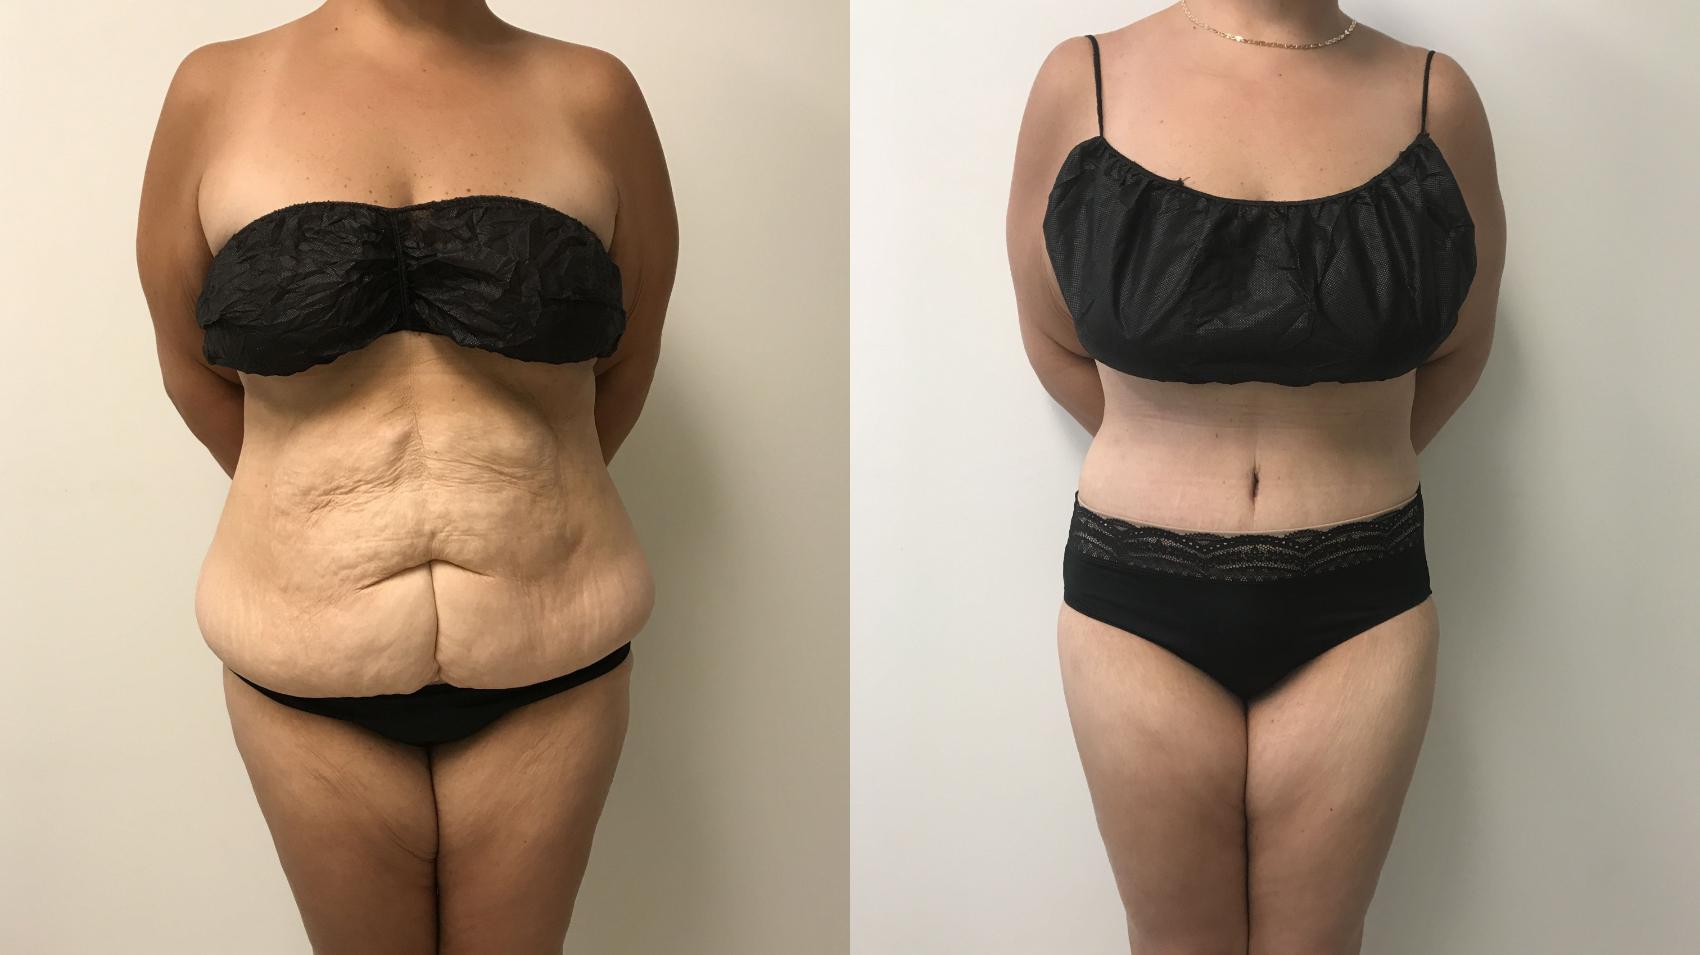 Liposuction vs Tummy Tuck - Chicago Liposuction by Lift Body Center